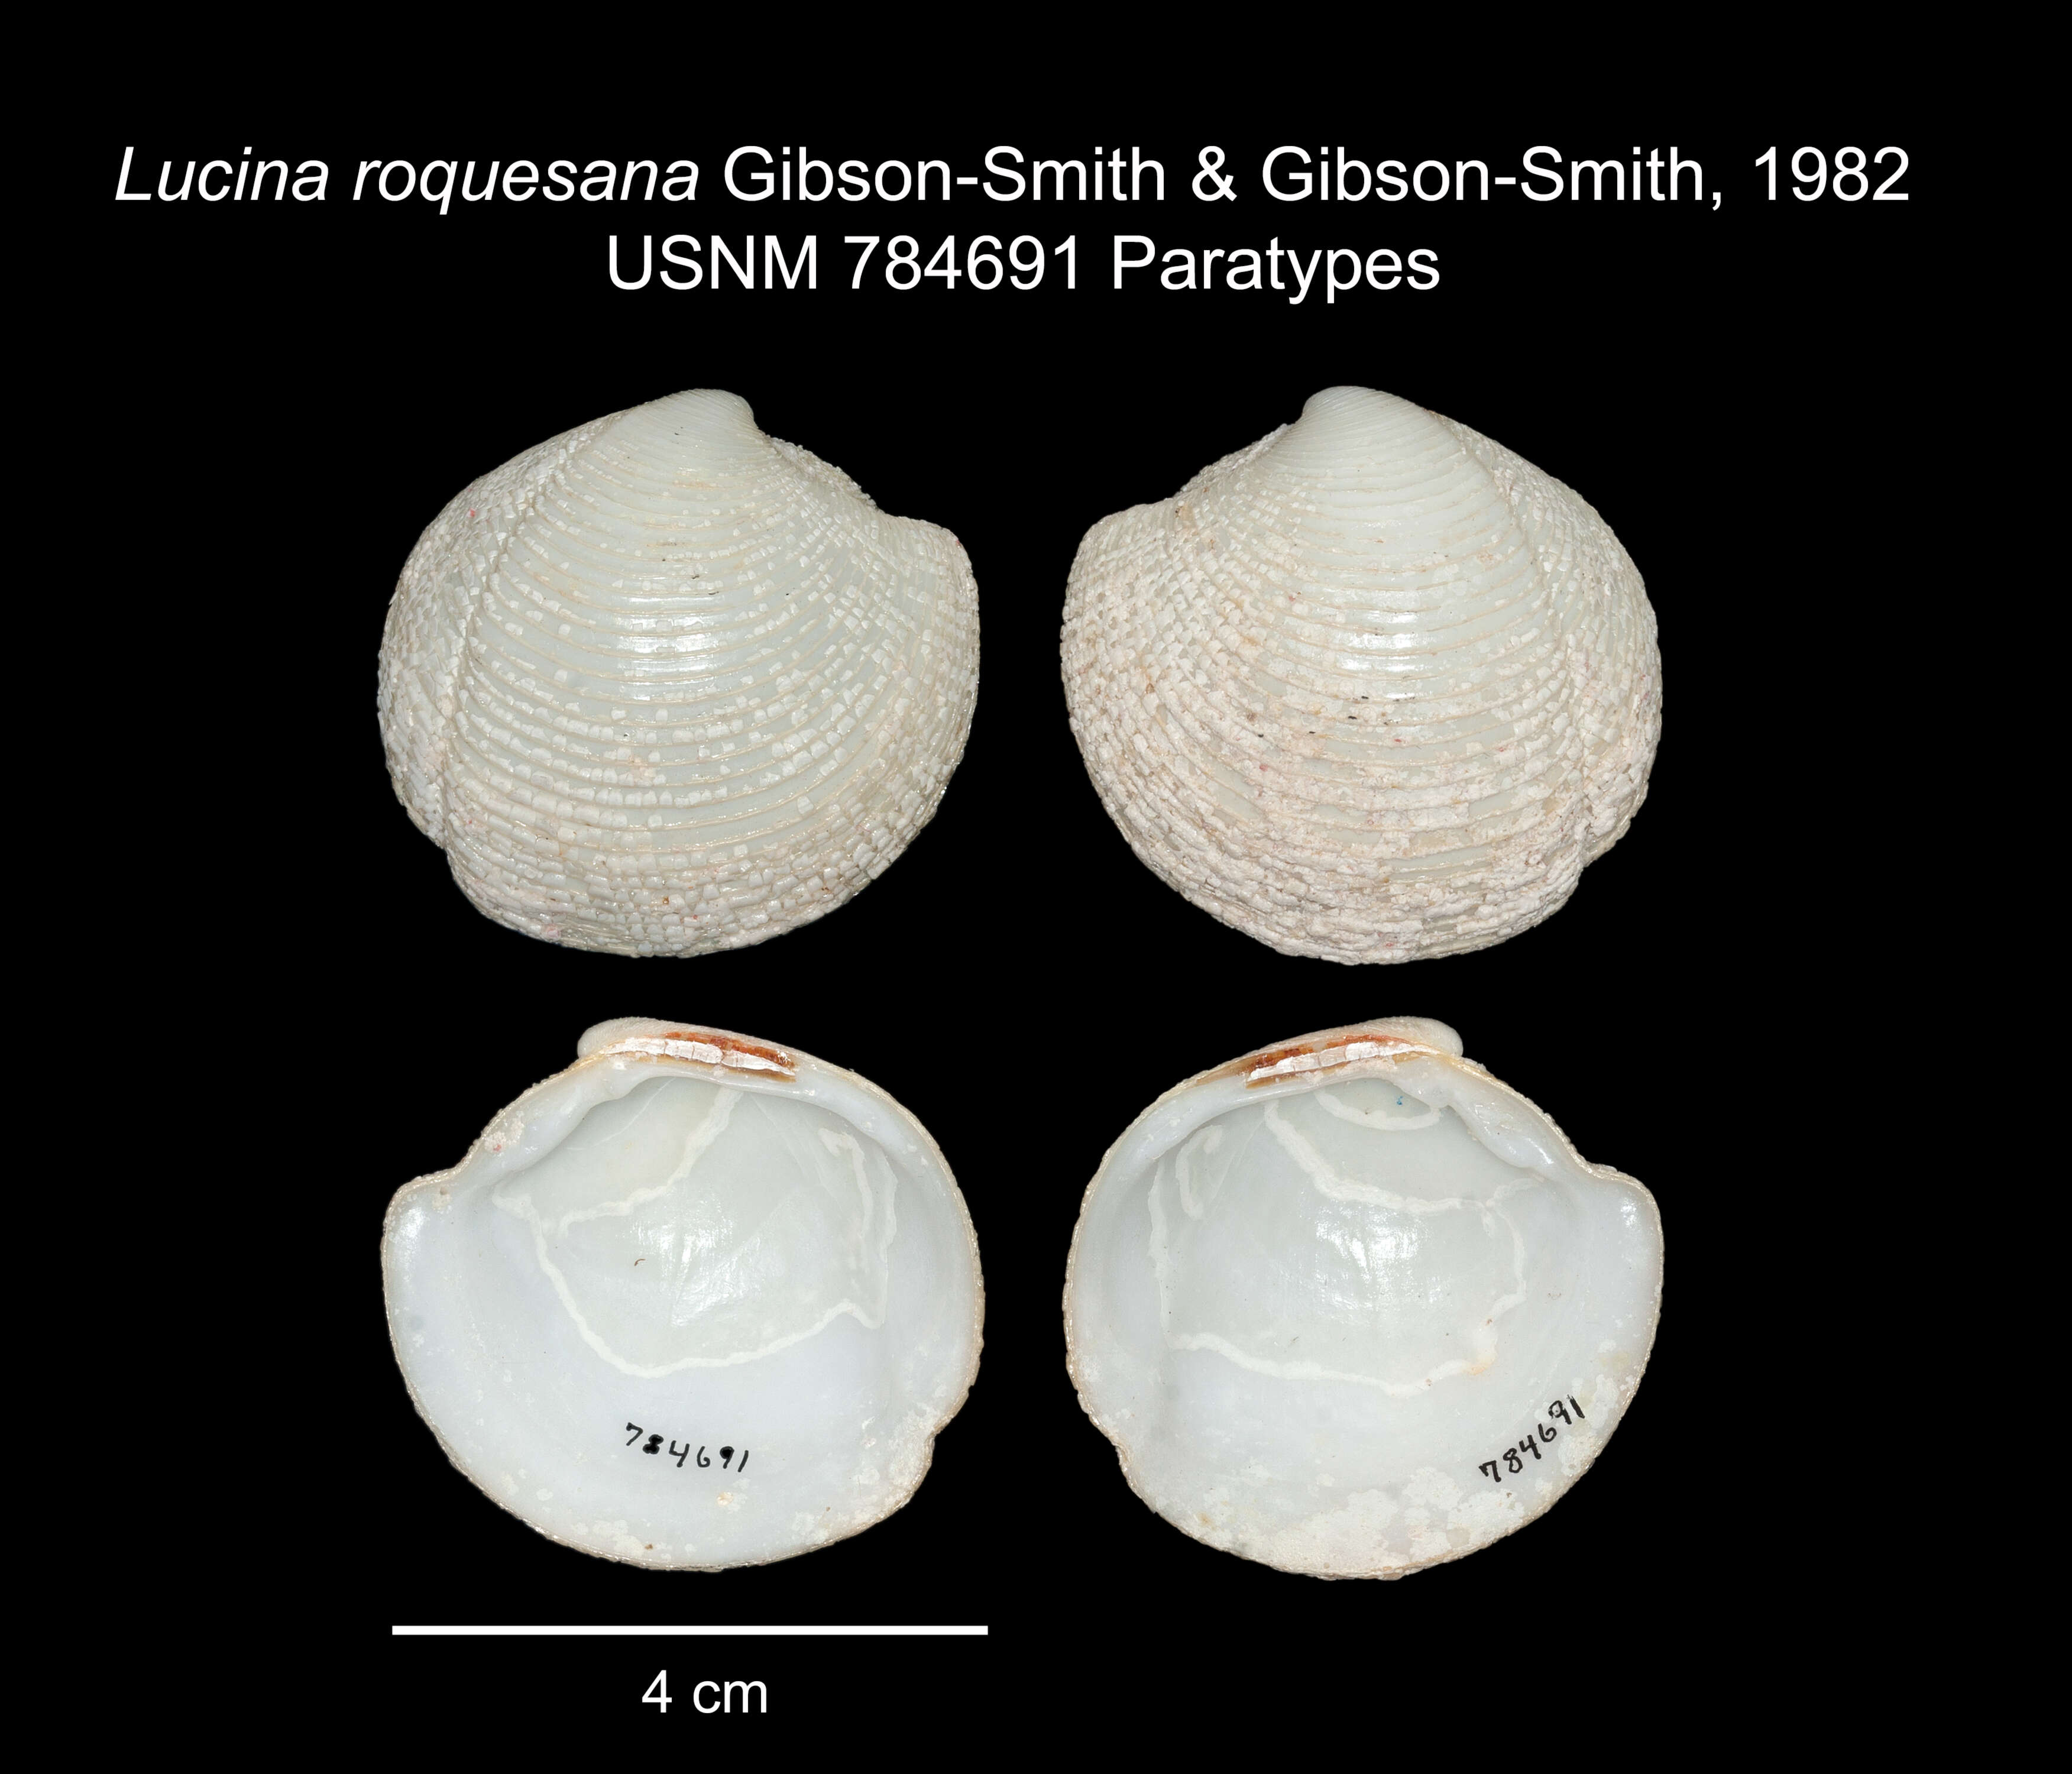 Image of Lucina roquesana J. Gibson-Smith & W. Gibson-Smith 1982